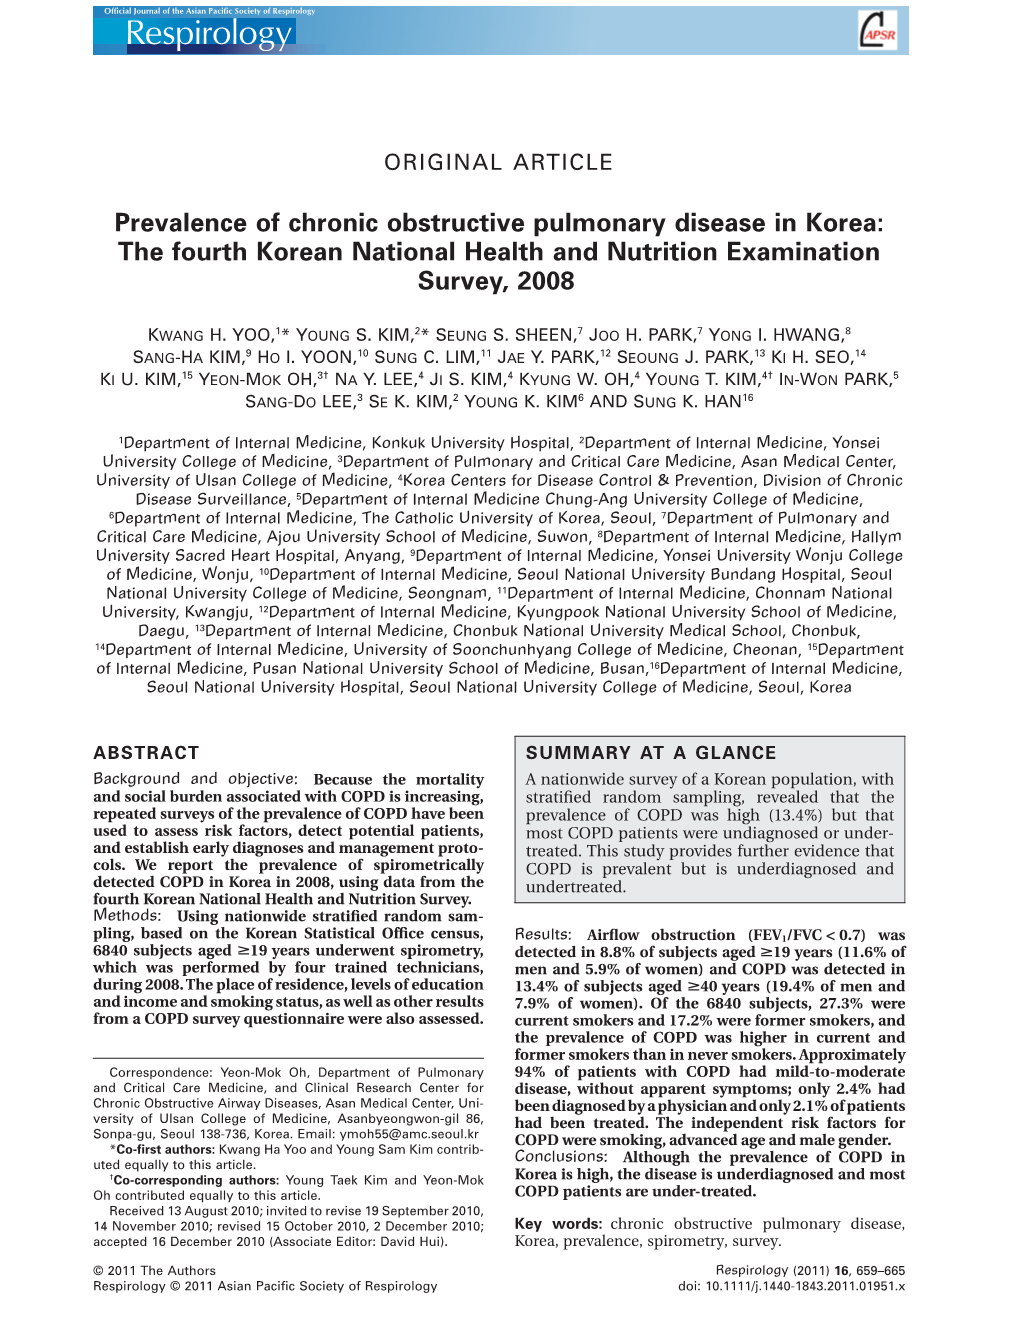 Prevalence of Chronic Obstructive Pulmonary Disease in Korea: the Fourth Korean National Health and Nutrition Examination